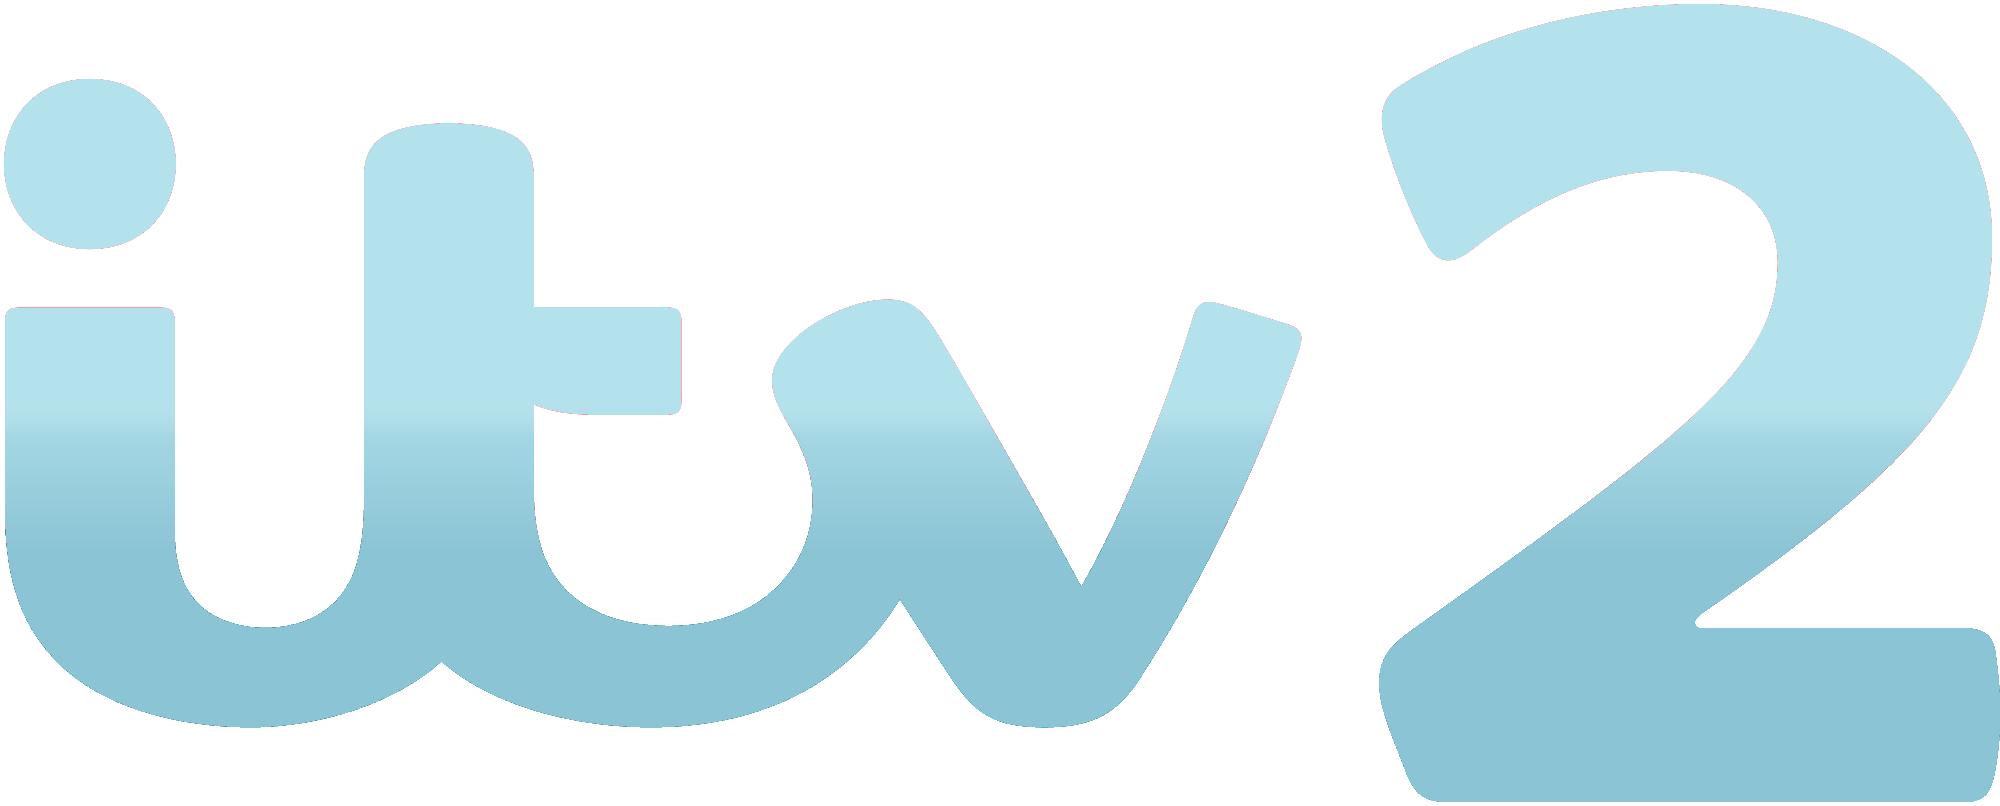 File:ITV HD logo.svg - Itv2 H